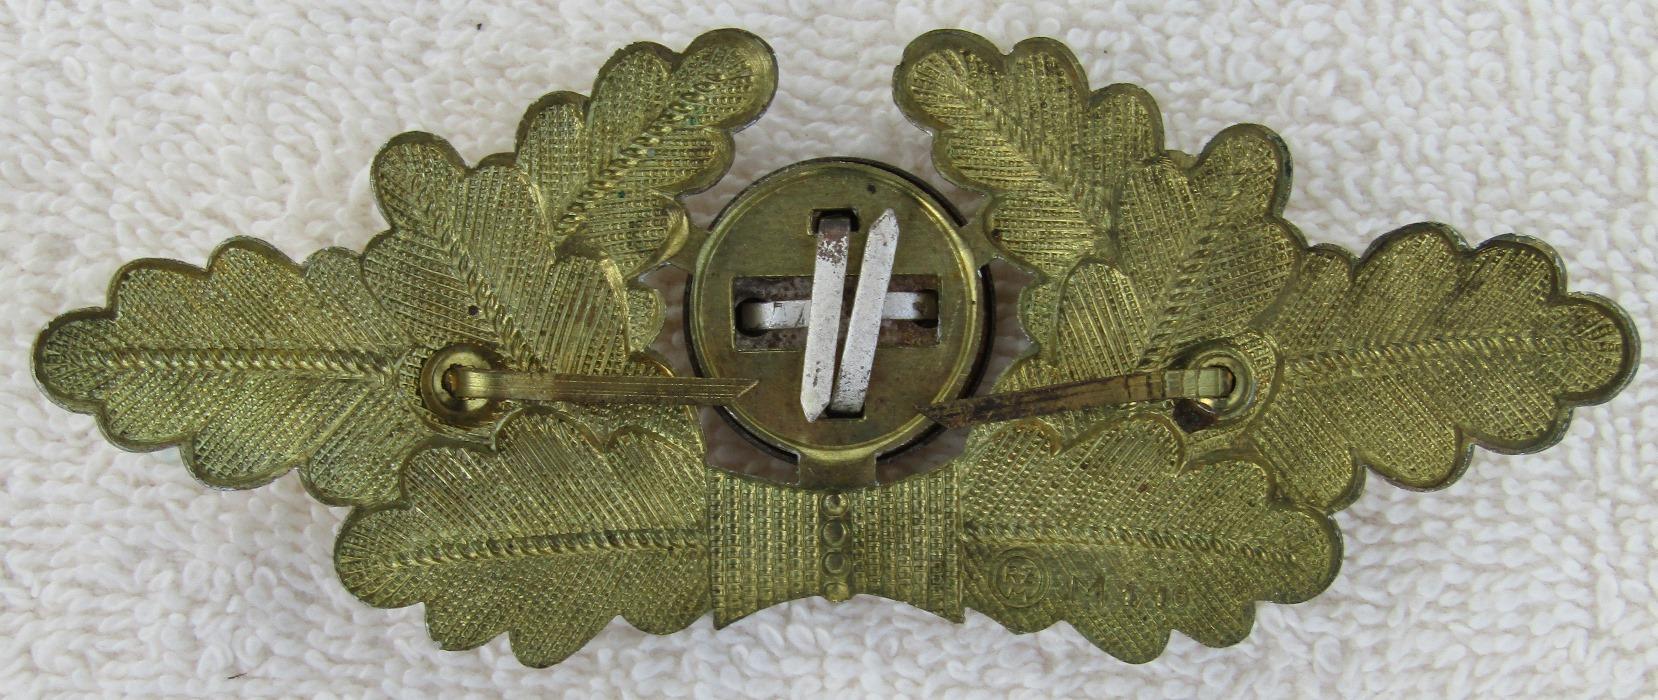 Nazi Political Leader Visor Cap Wreath Device-RZM Maker Marked